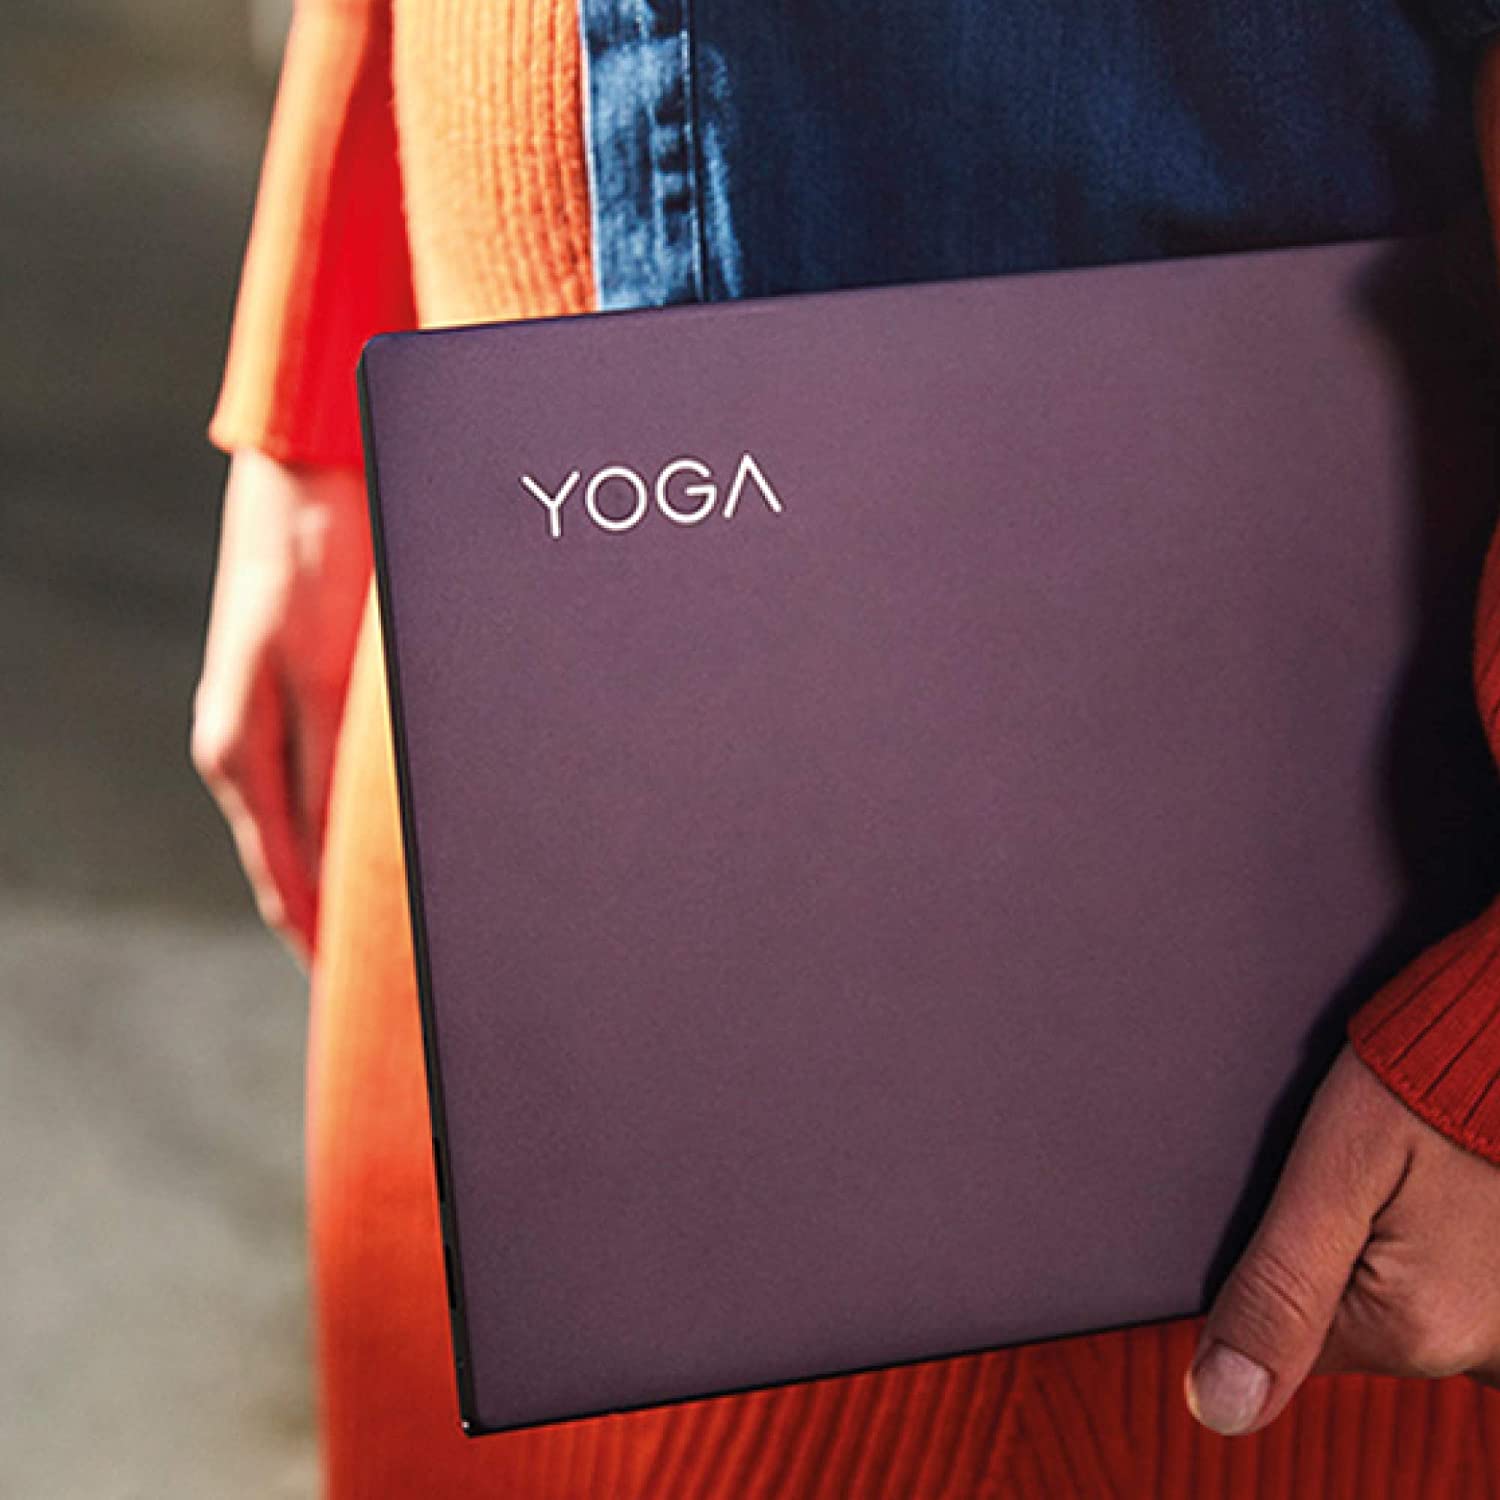 Lenovo Yoga specs update